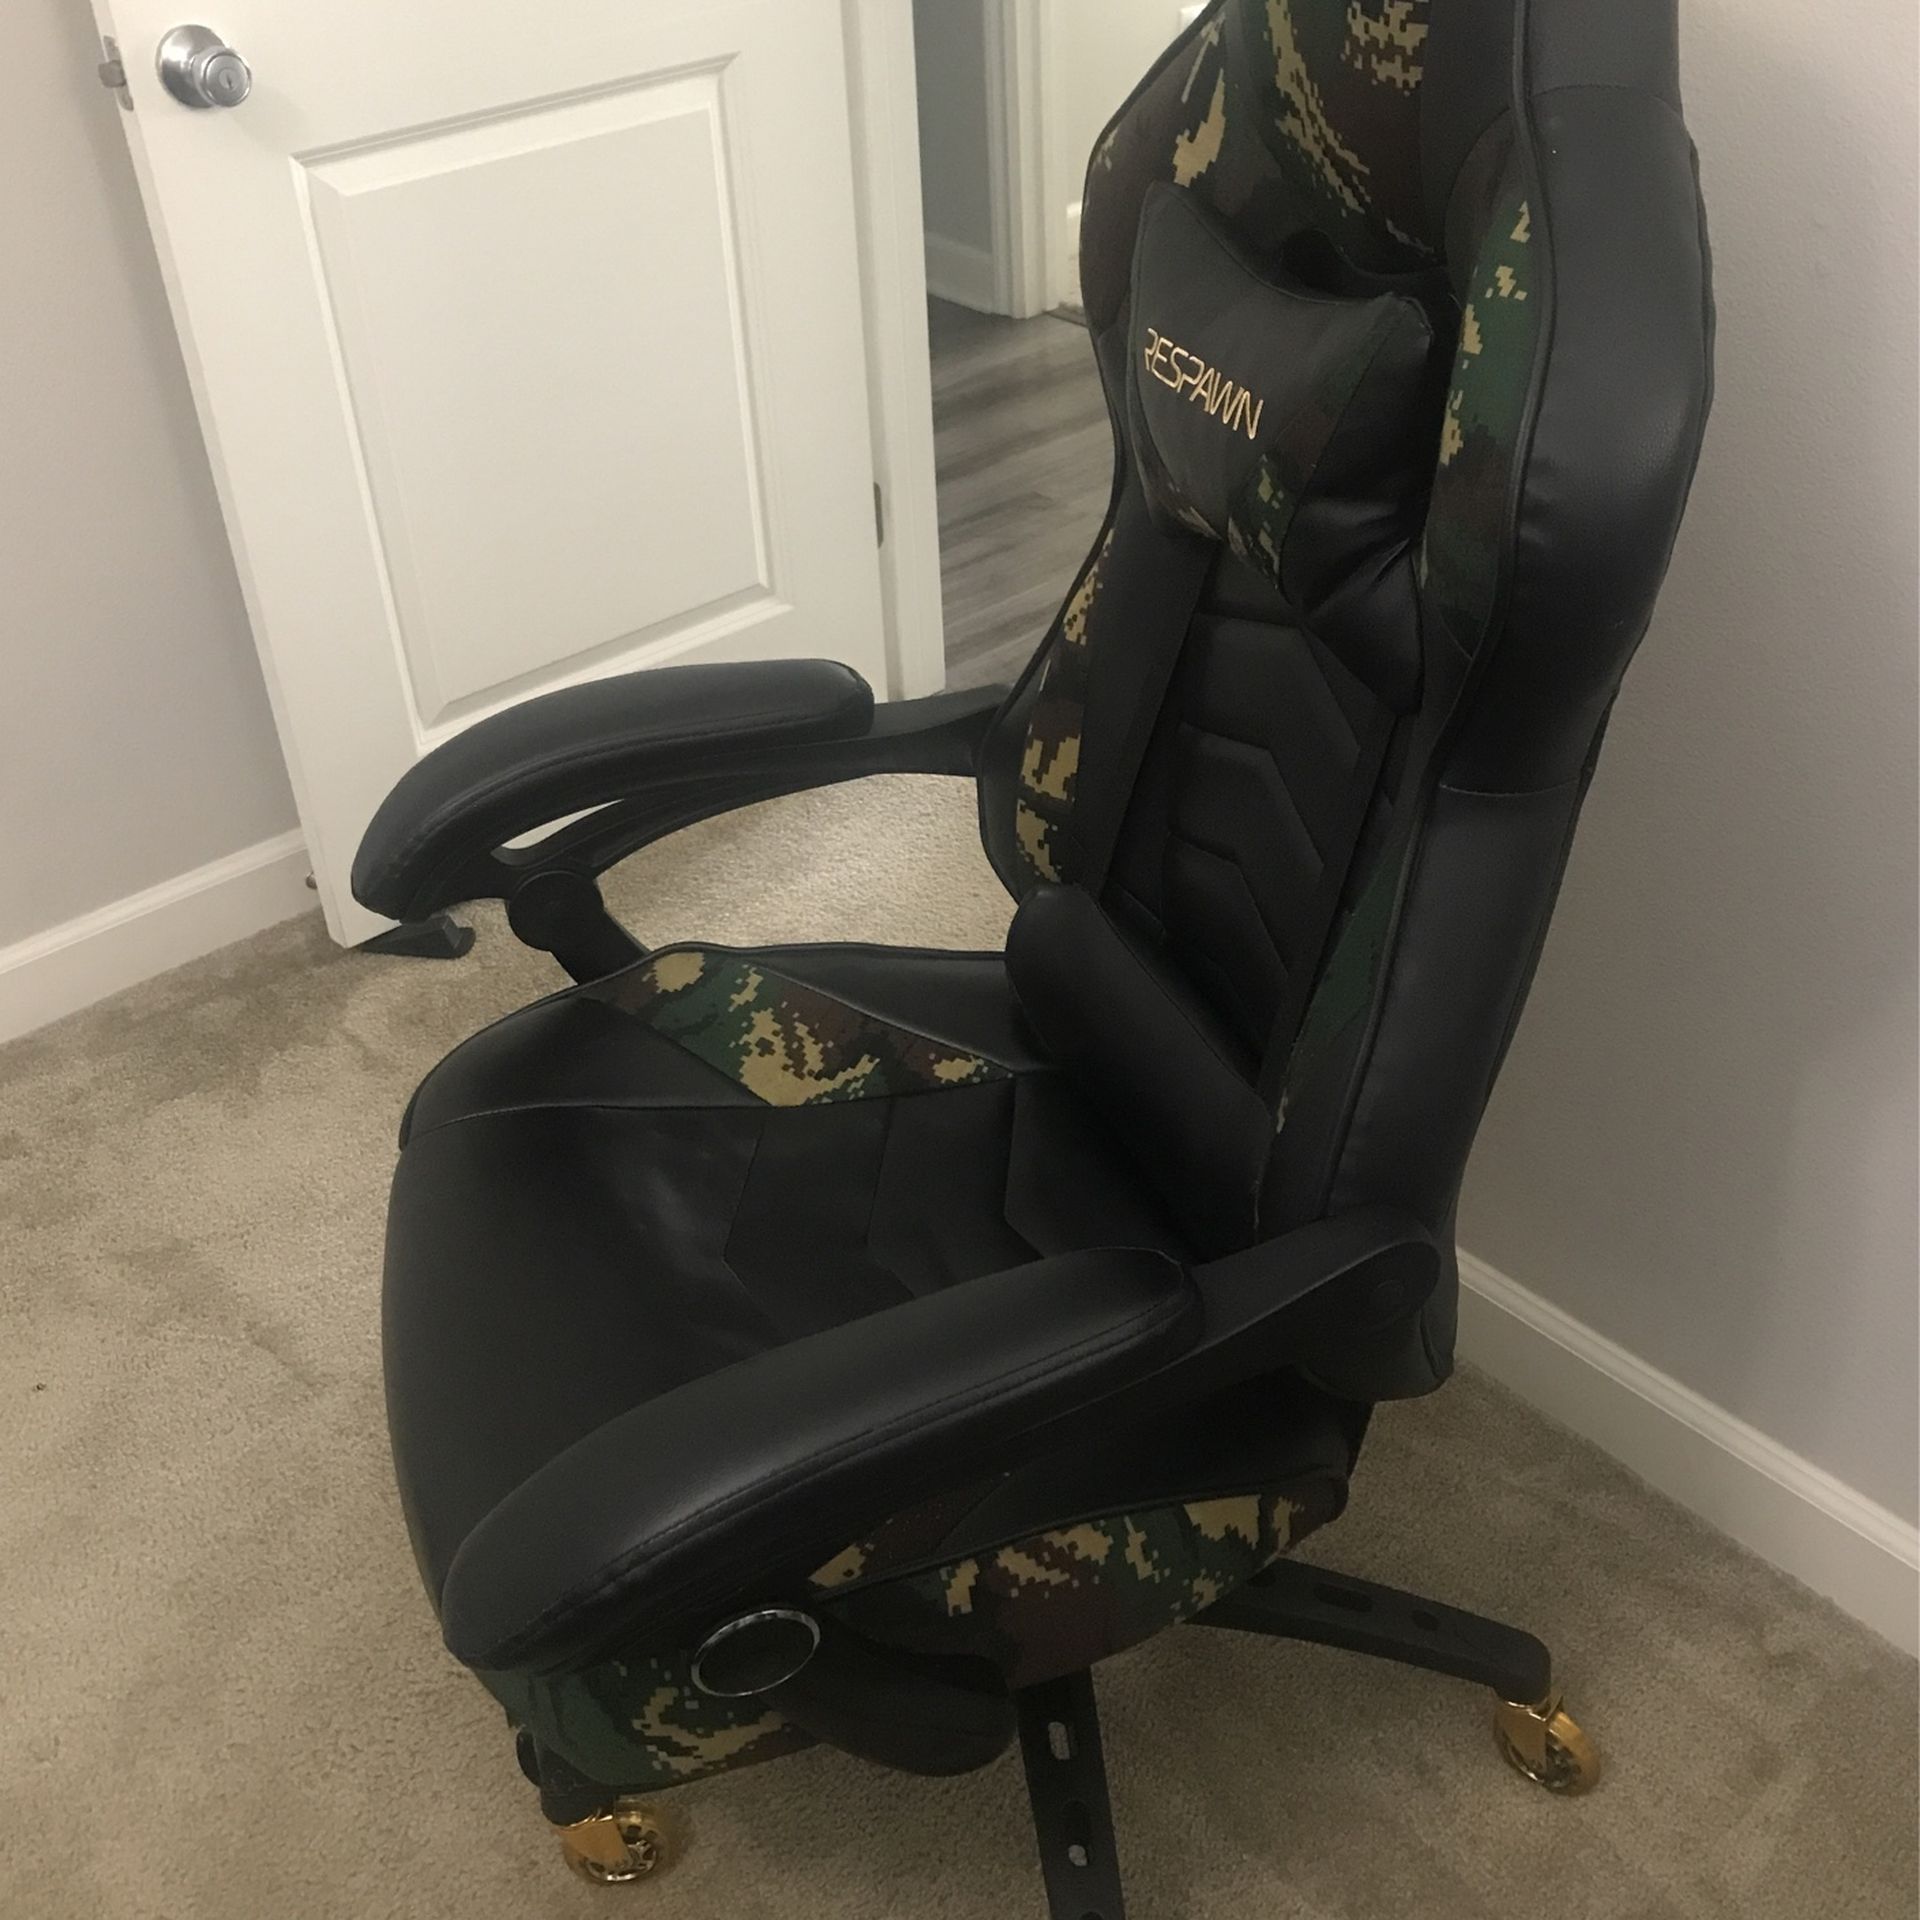 Respawn Camo Gaming Chair